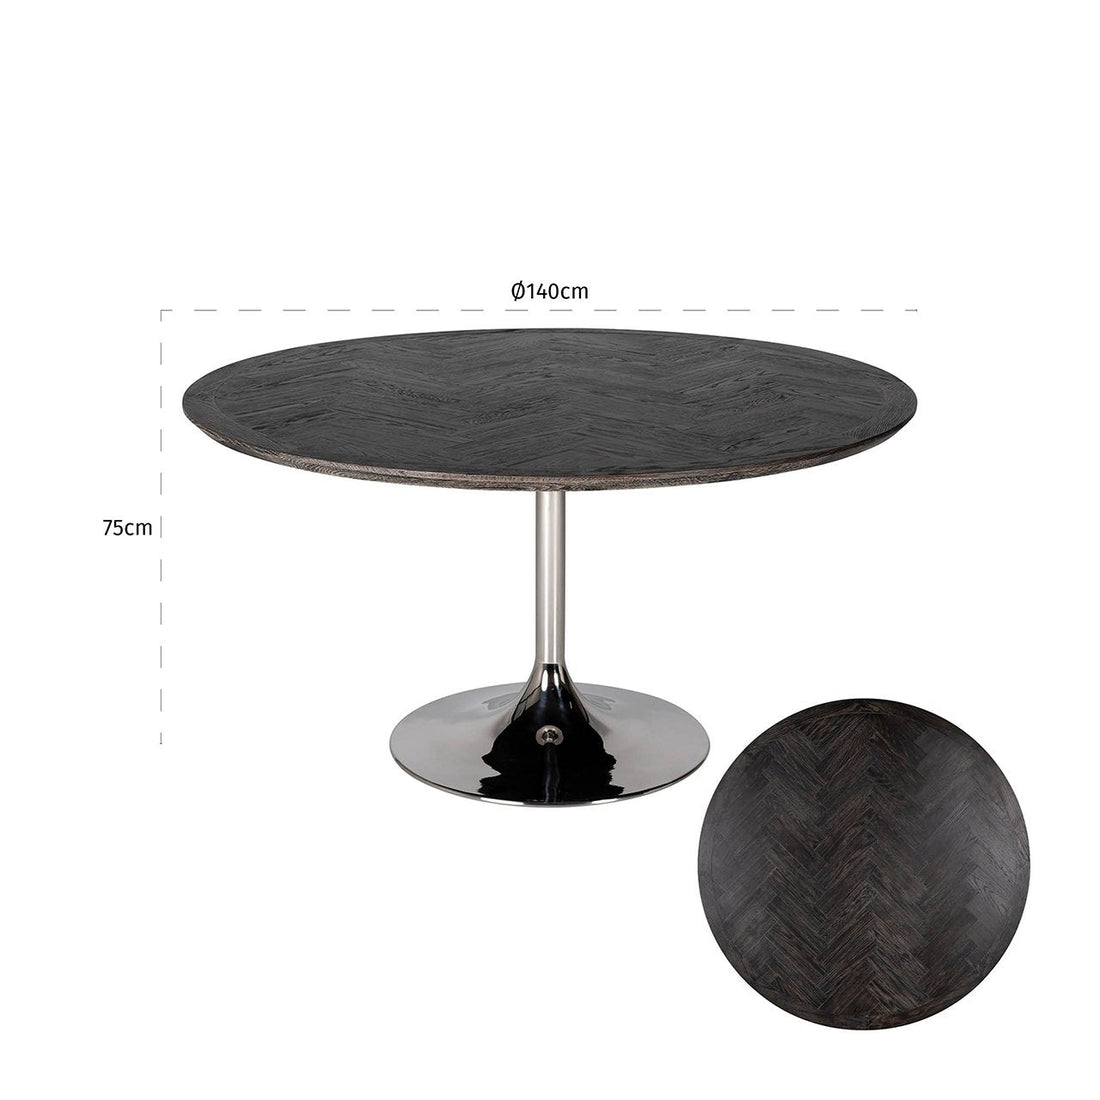 Maataanduiding: Ronde tafel in zwarte eik met RVS voet | Ø140 cm